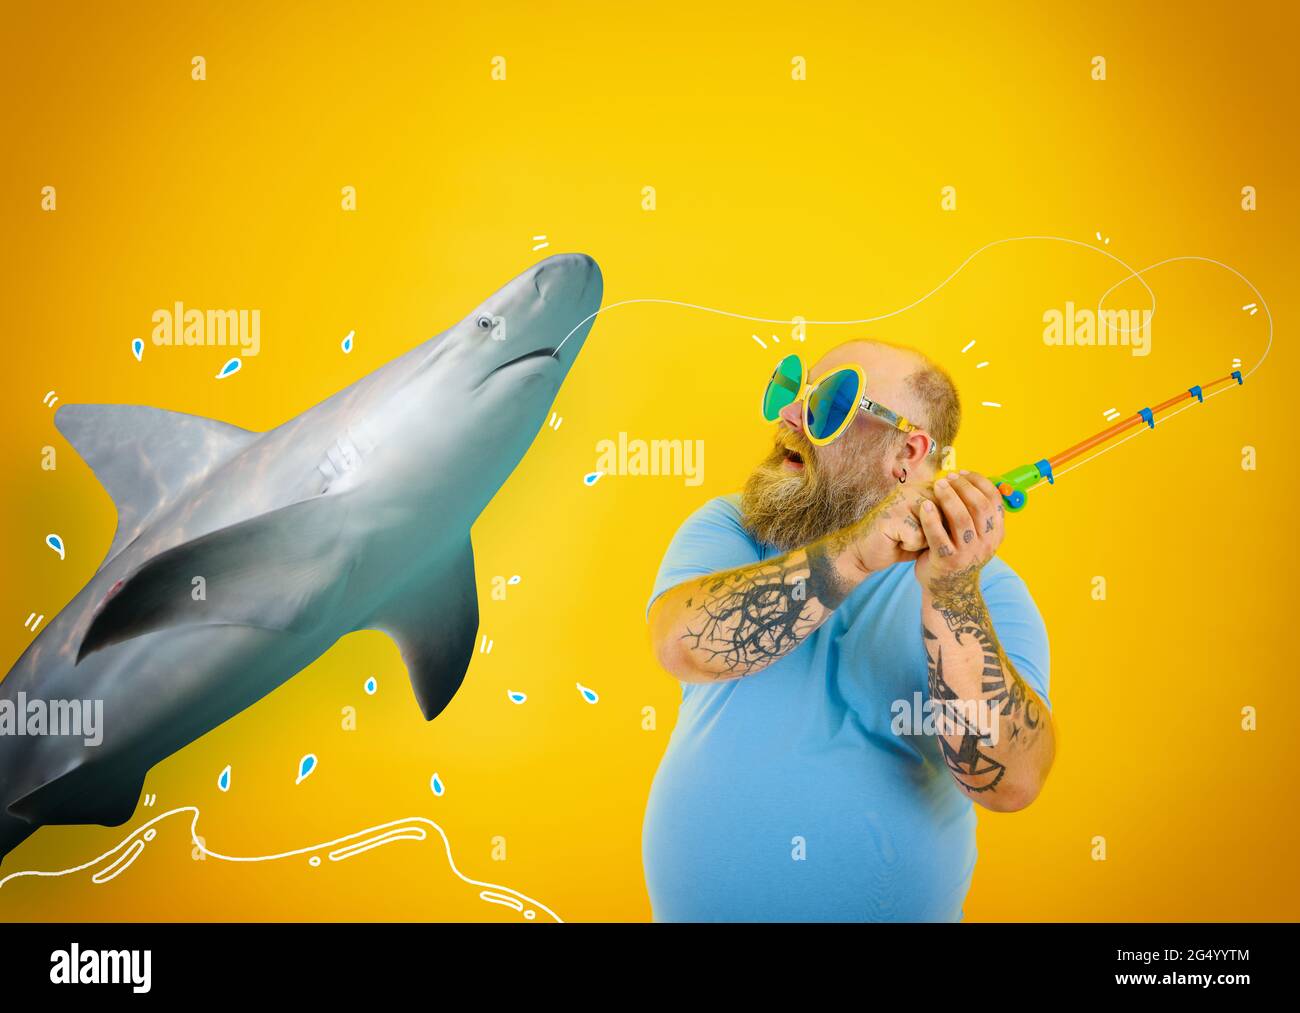 https://c8.alamy.com/comp/2G4YYTM/fat-afraid-man-with-beard-and-sunglasses-caught-a-shark-with-the-fishing-rod-2G4YYTM.jpg